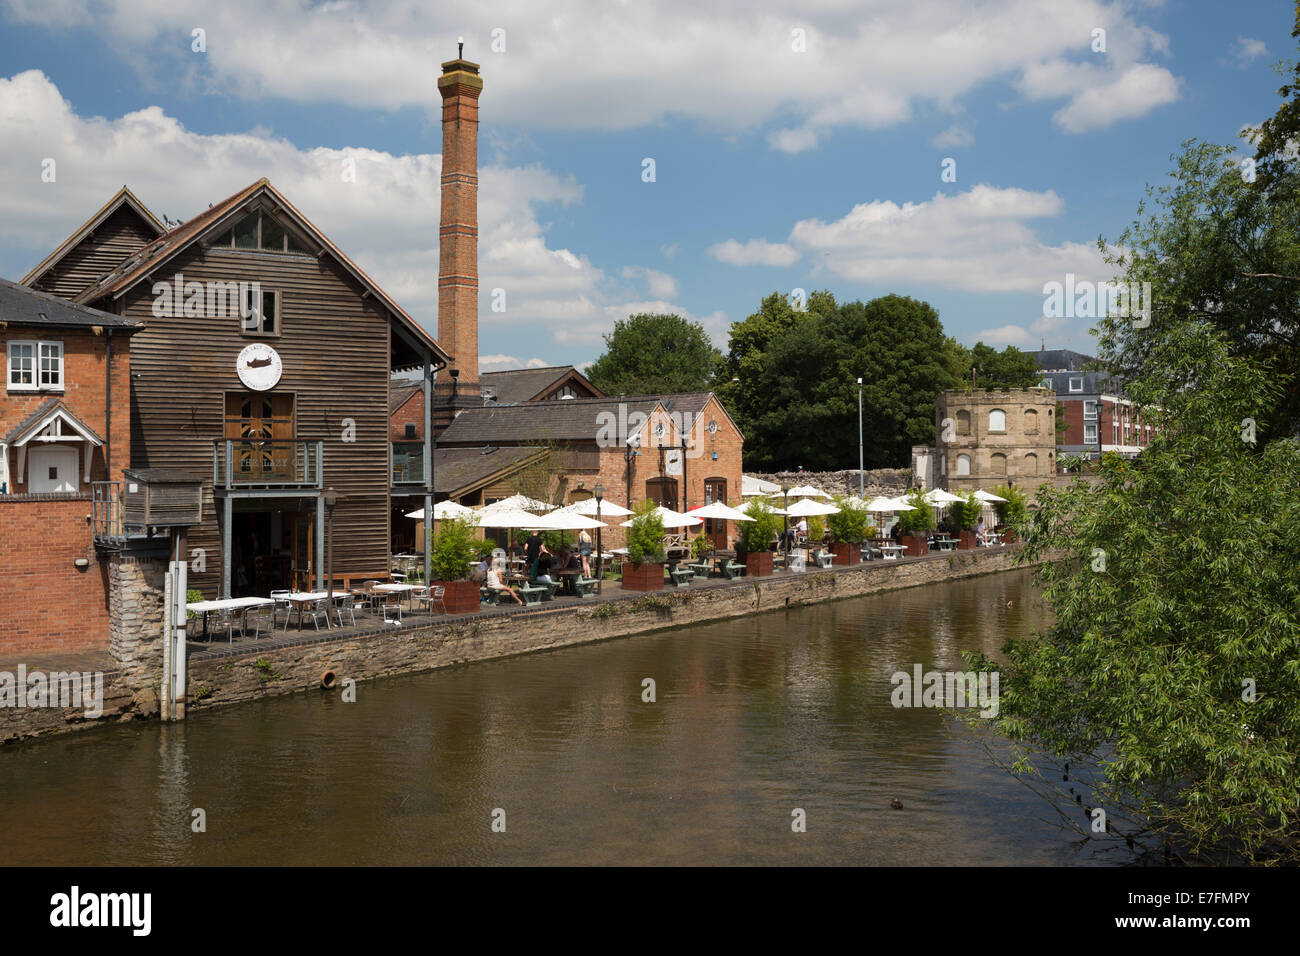 The Lazy Cow riverside restaurant, Stratford-upon-Avon, Warwickshire, England, United Kingdom, Europe Stock Photo